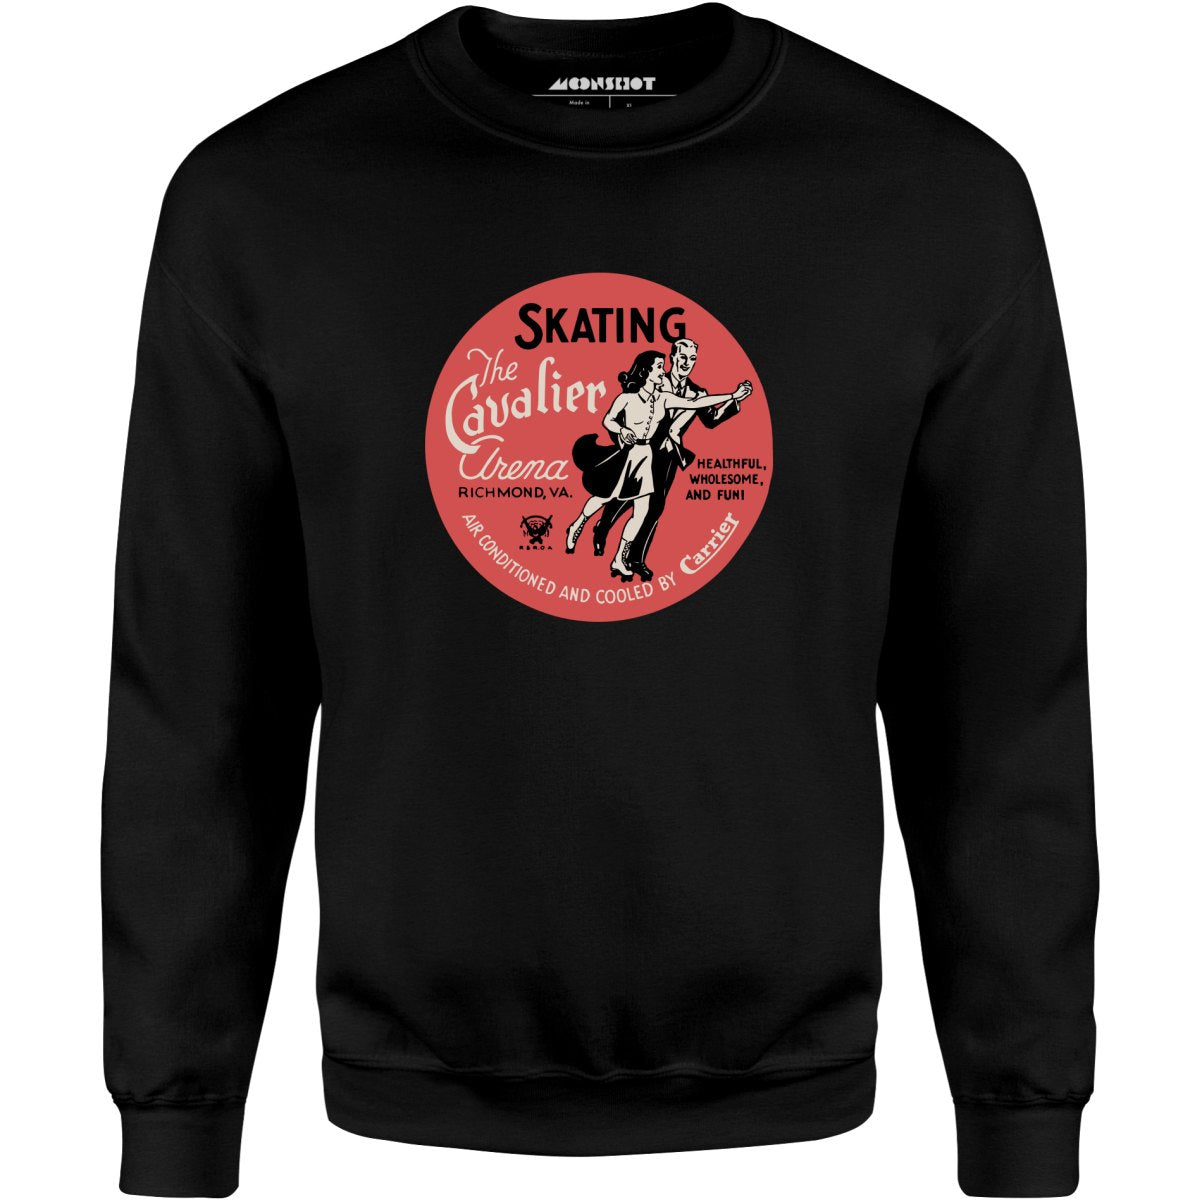 The Cavalier Arena - Richmond, VA - Vintage Roller Rink - Unisex Sweatshirt